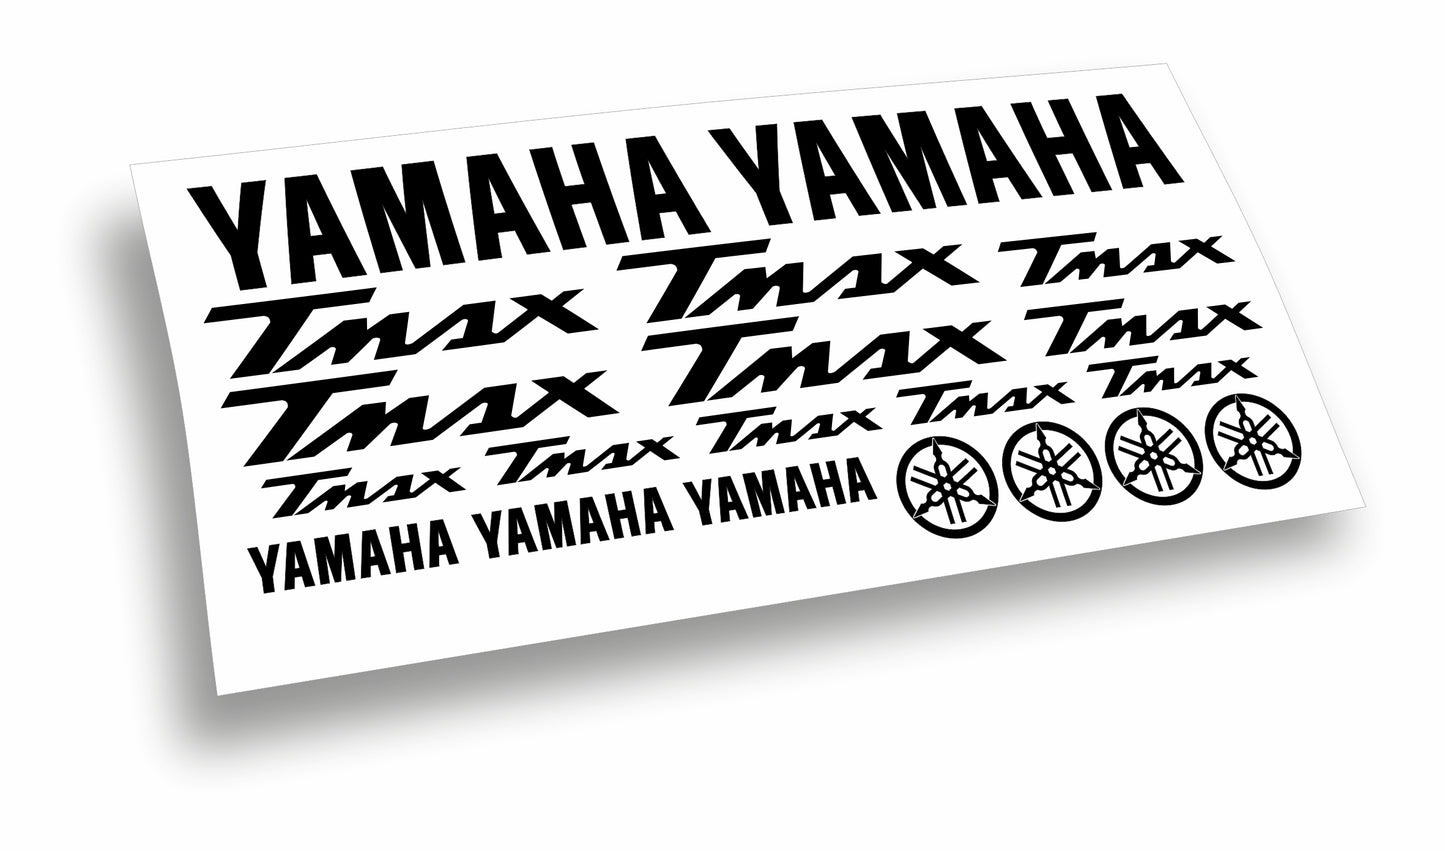 Yamaha Tmax adesivi/stickers/decalcomanie scooter moto standard